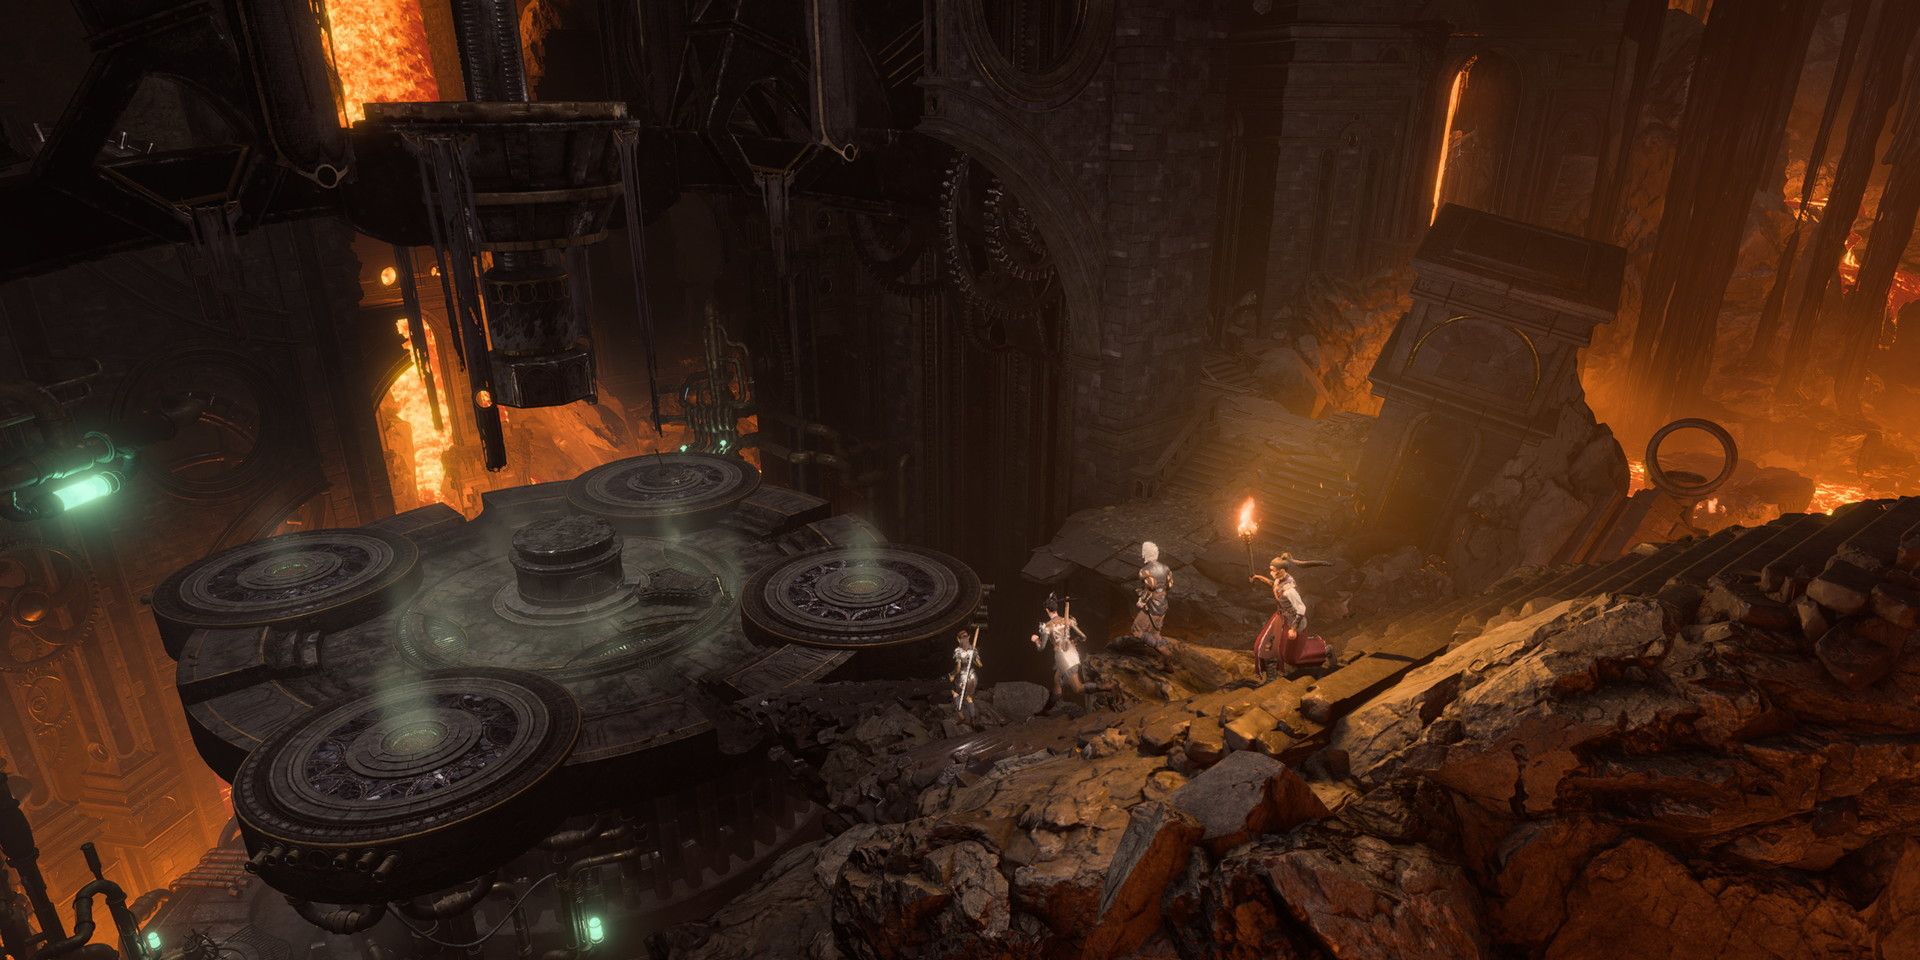 Baldur's Gate 3: PlayStation 5 players get two major advantages over PC